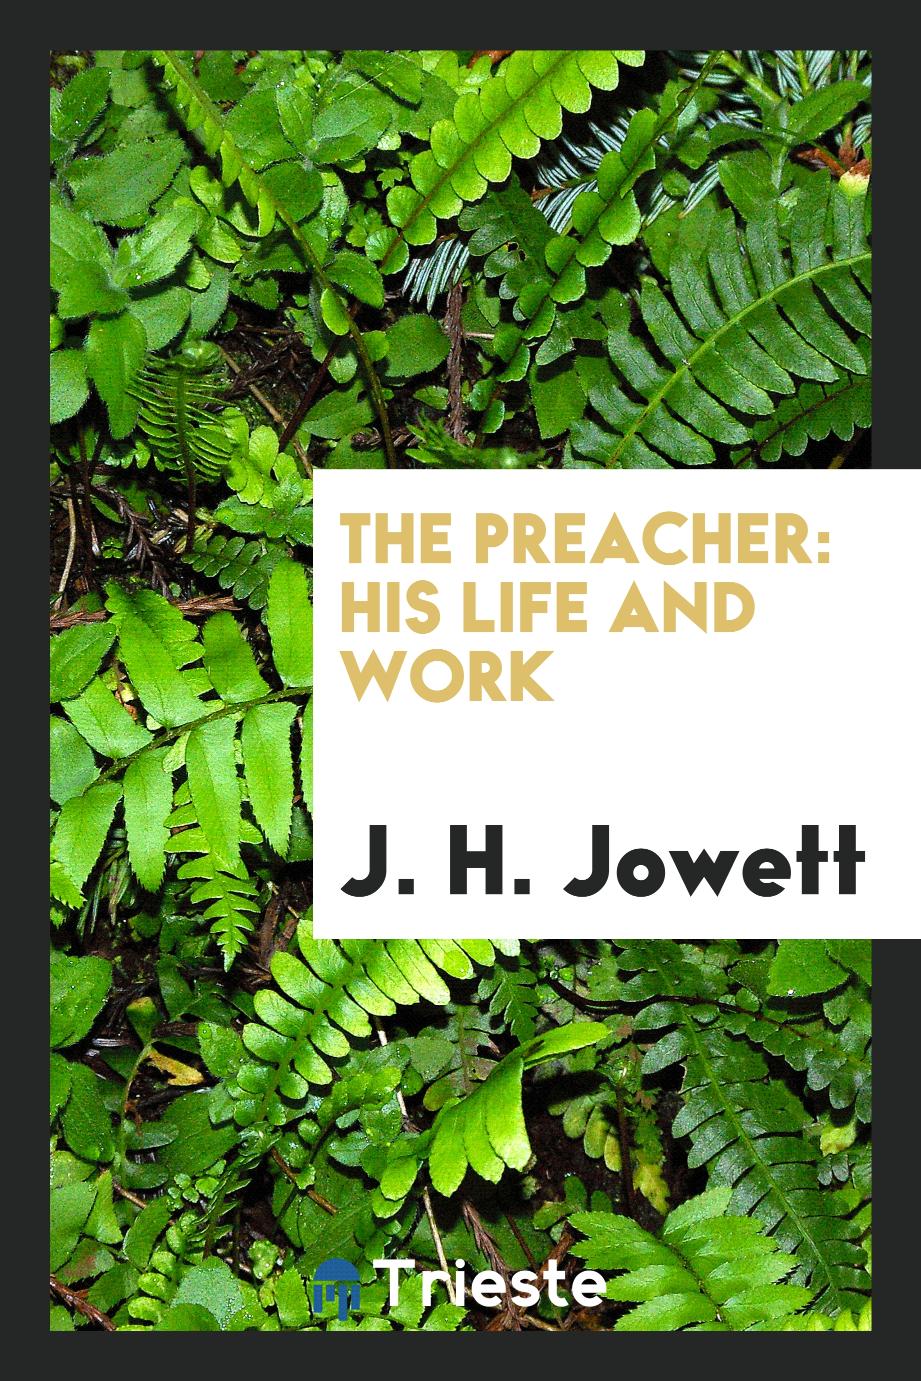 J. H. Jowett - The preacher: his life and work